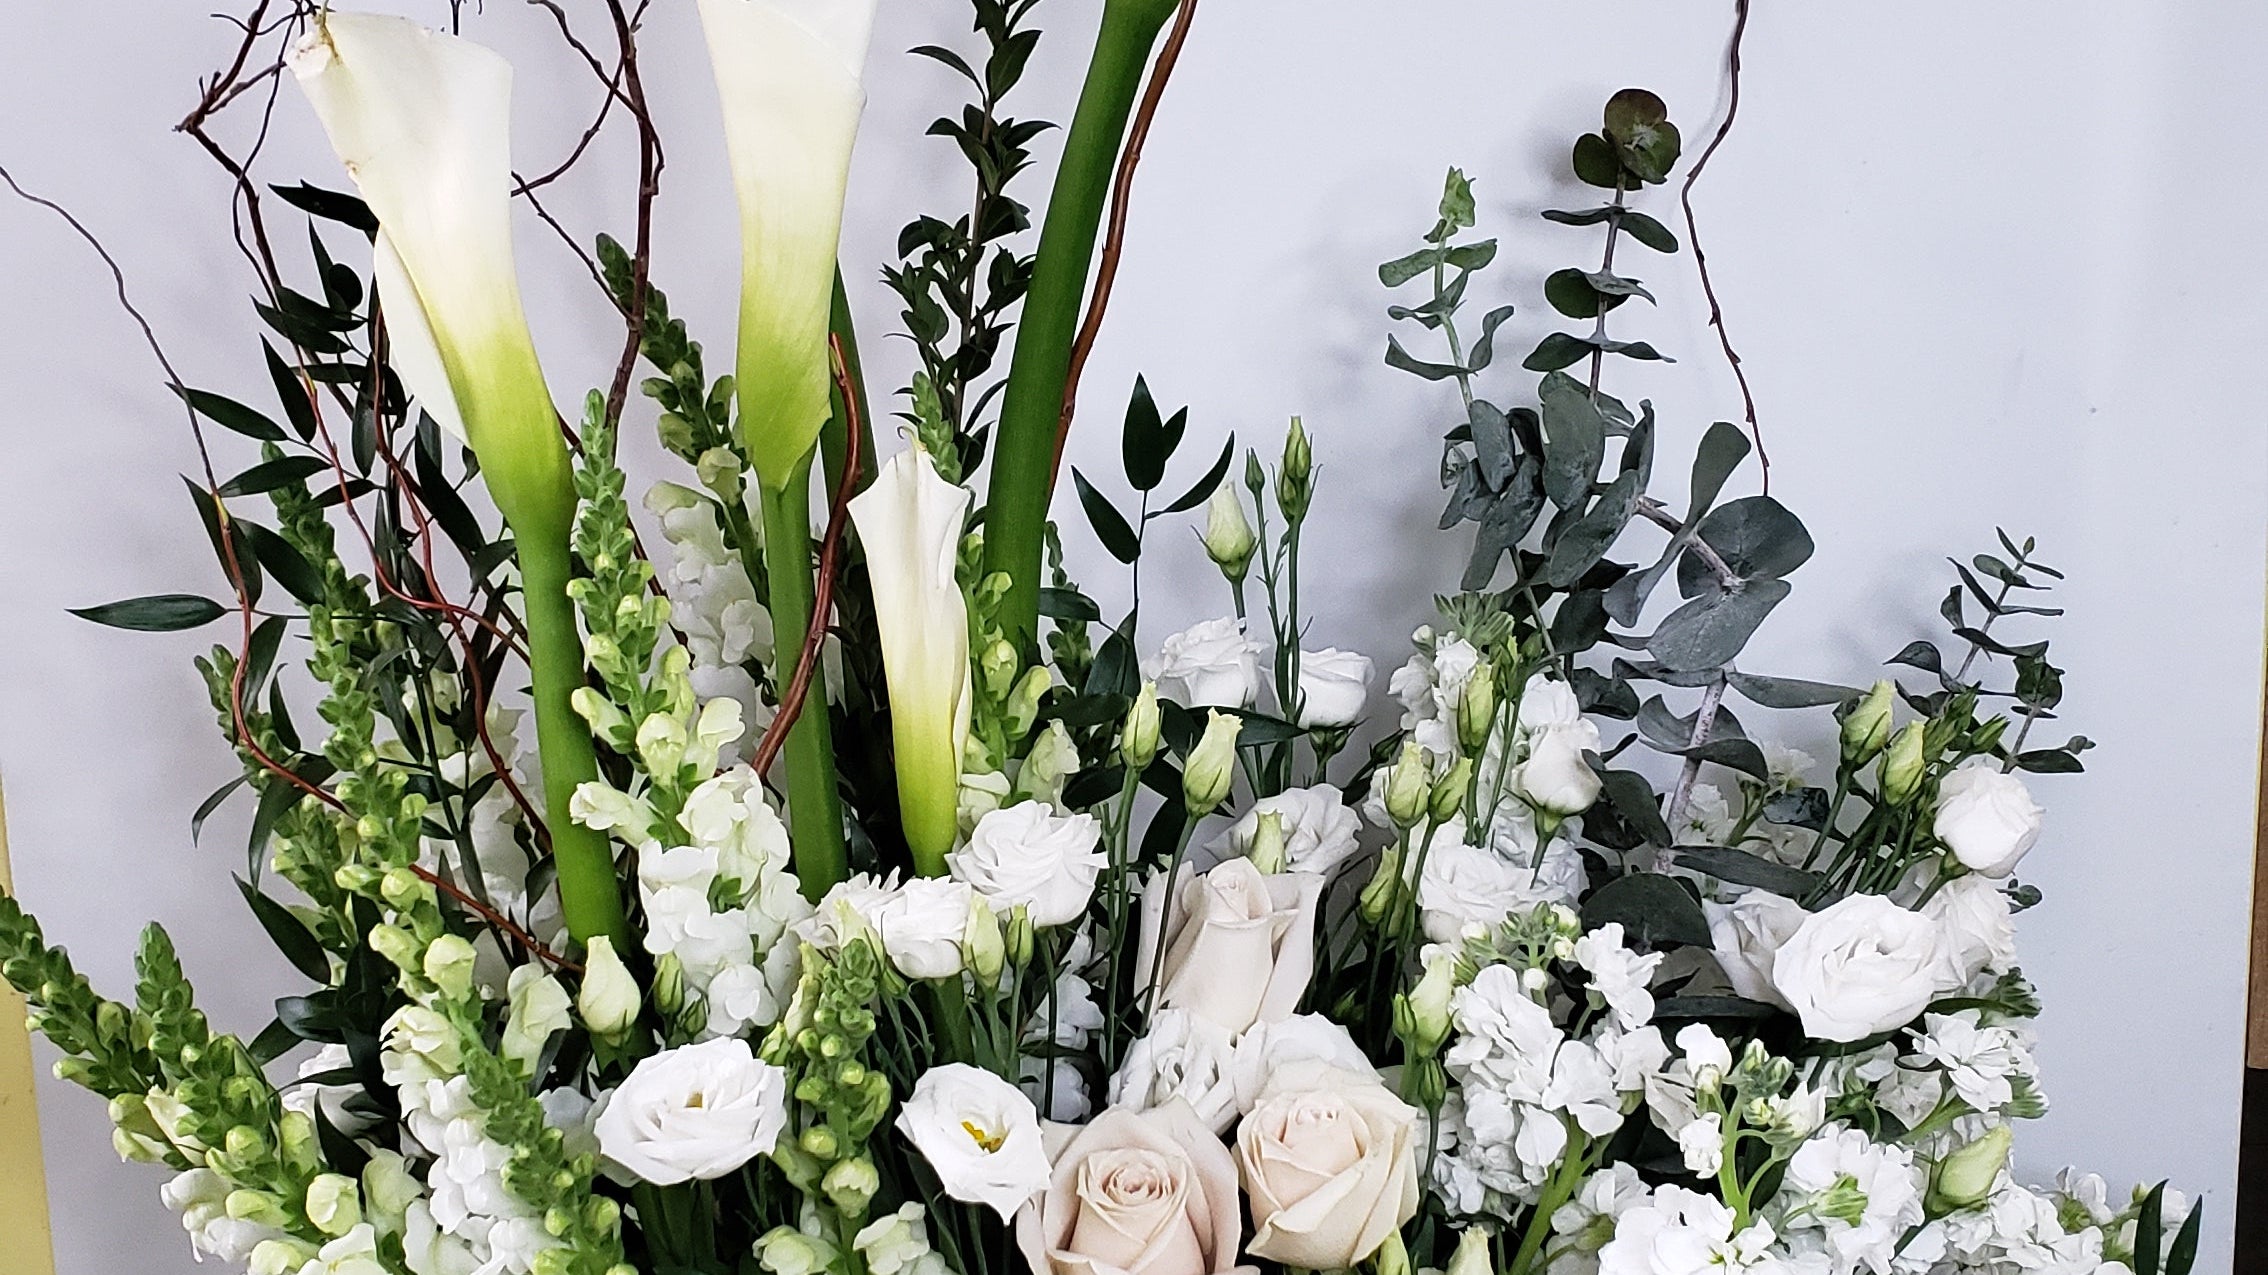 Funeral White Basket - Immanuel Florist